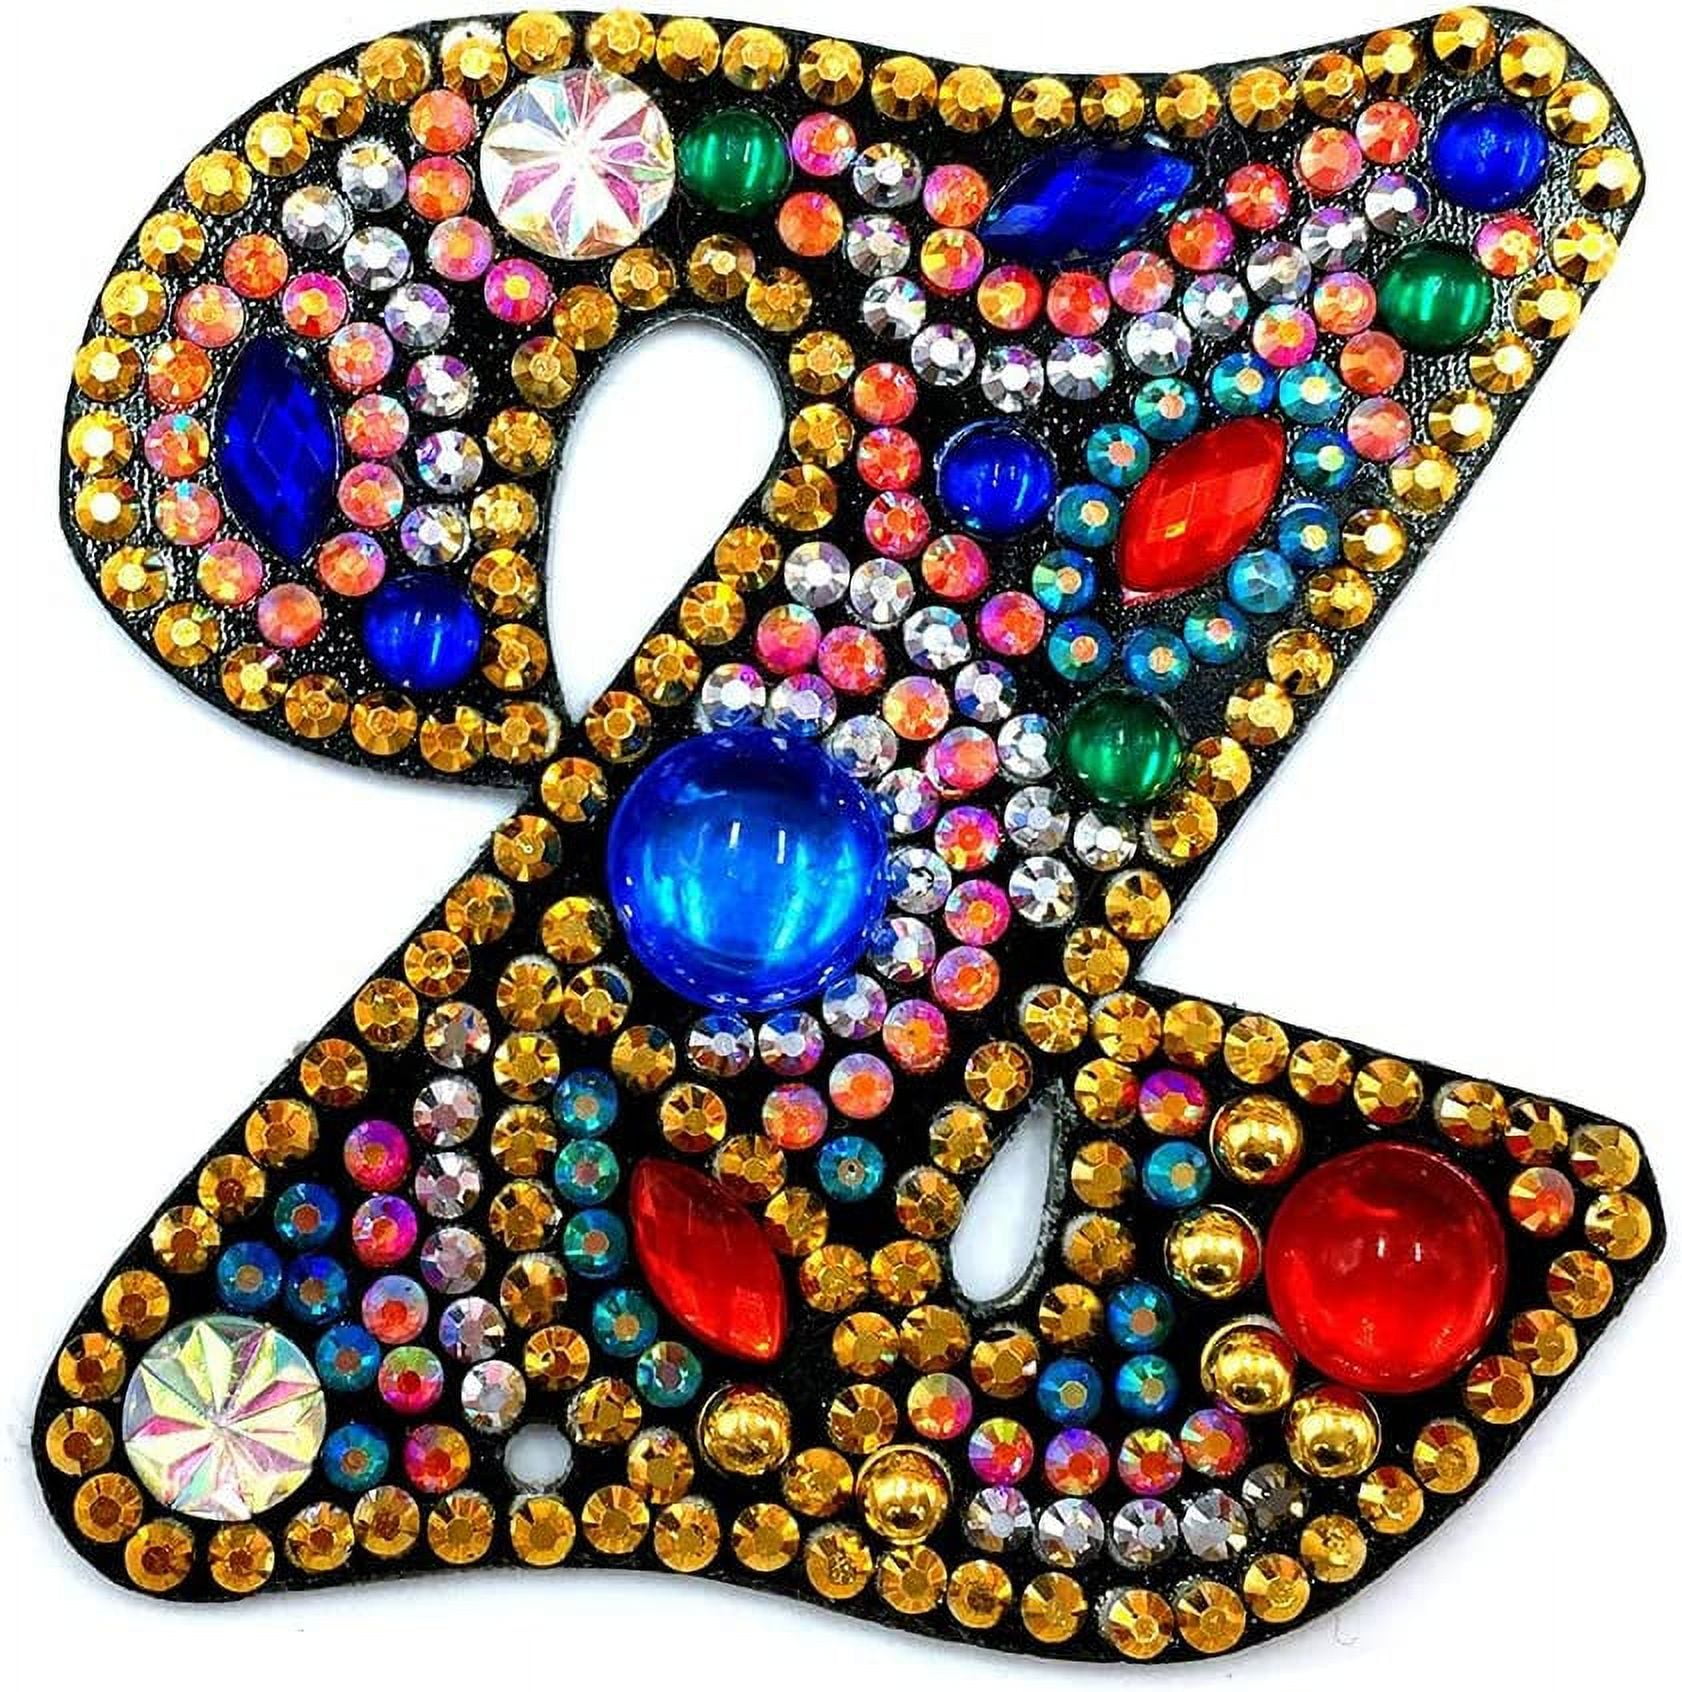 JOOZ Diamond Art Keychains A-Z 26 Letters Double Sided Keychains